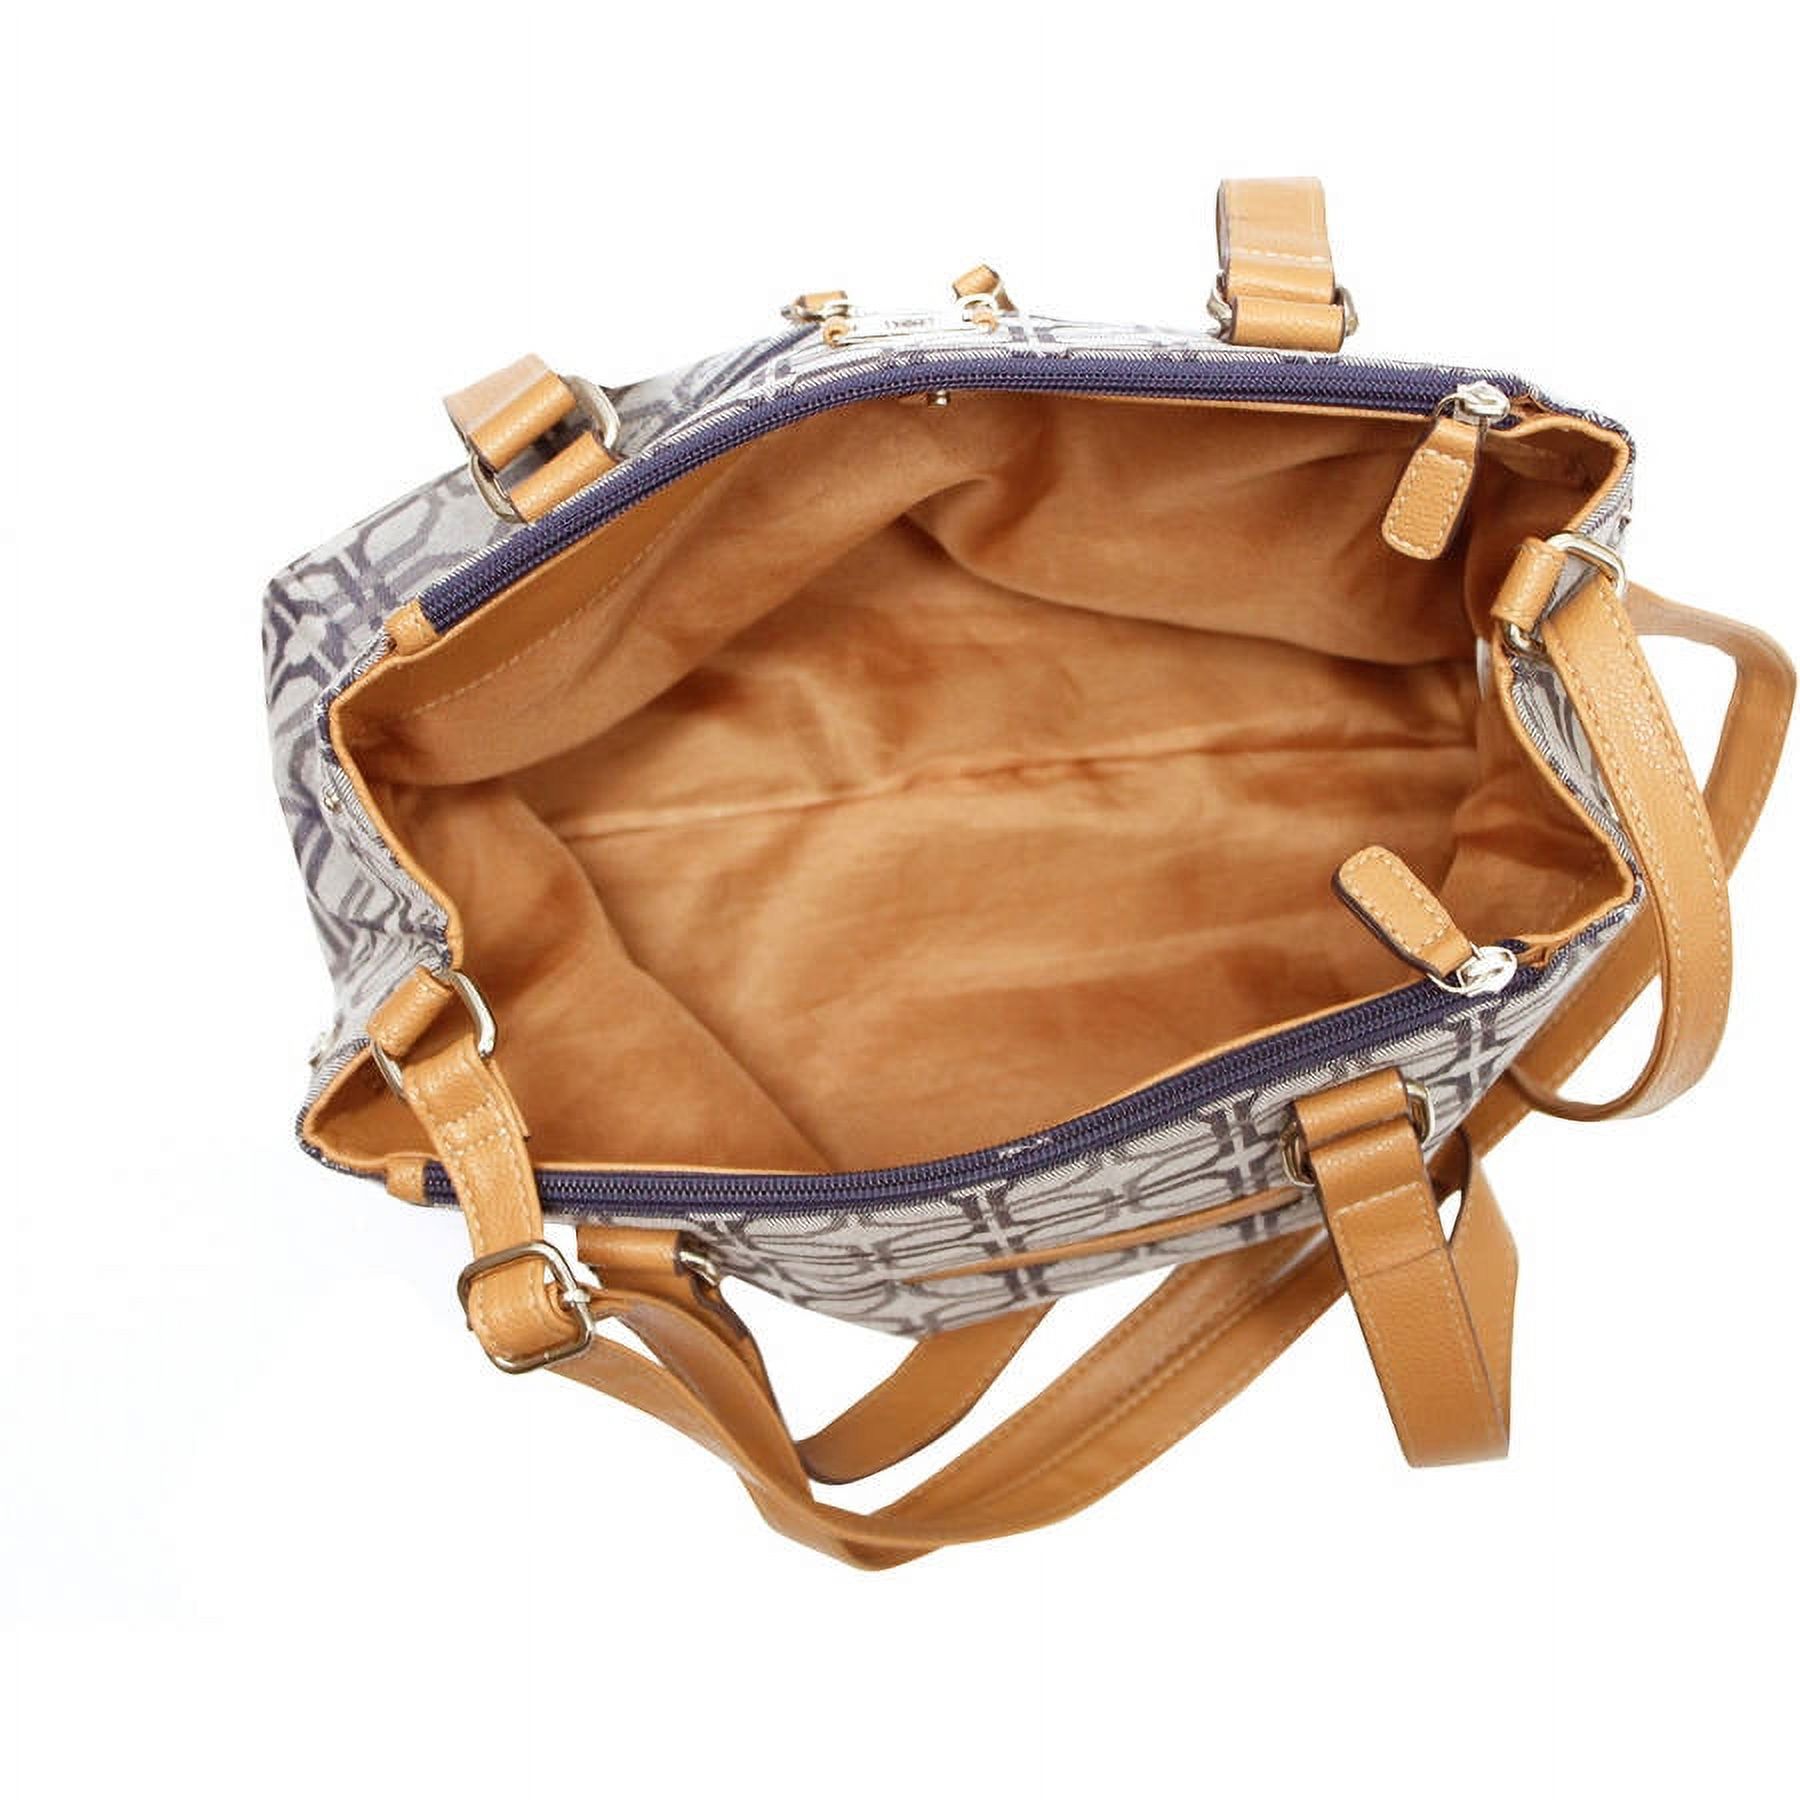 Women's Jacquard Satchel Handbag - image 3 of 3